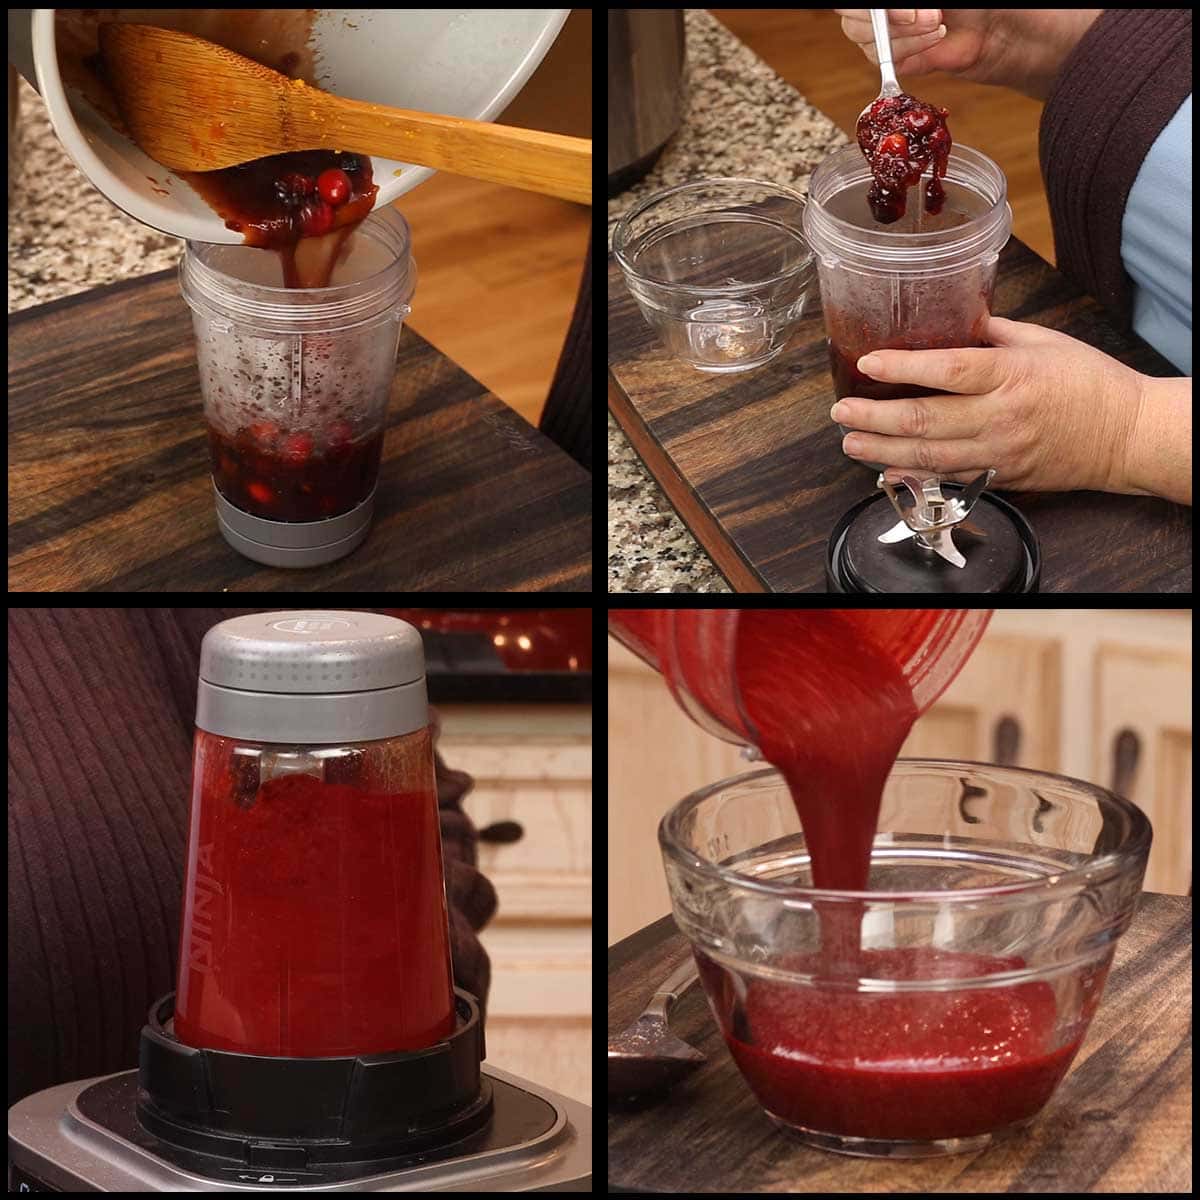 blending the cranberry sauce